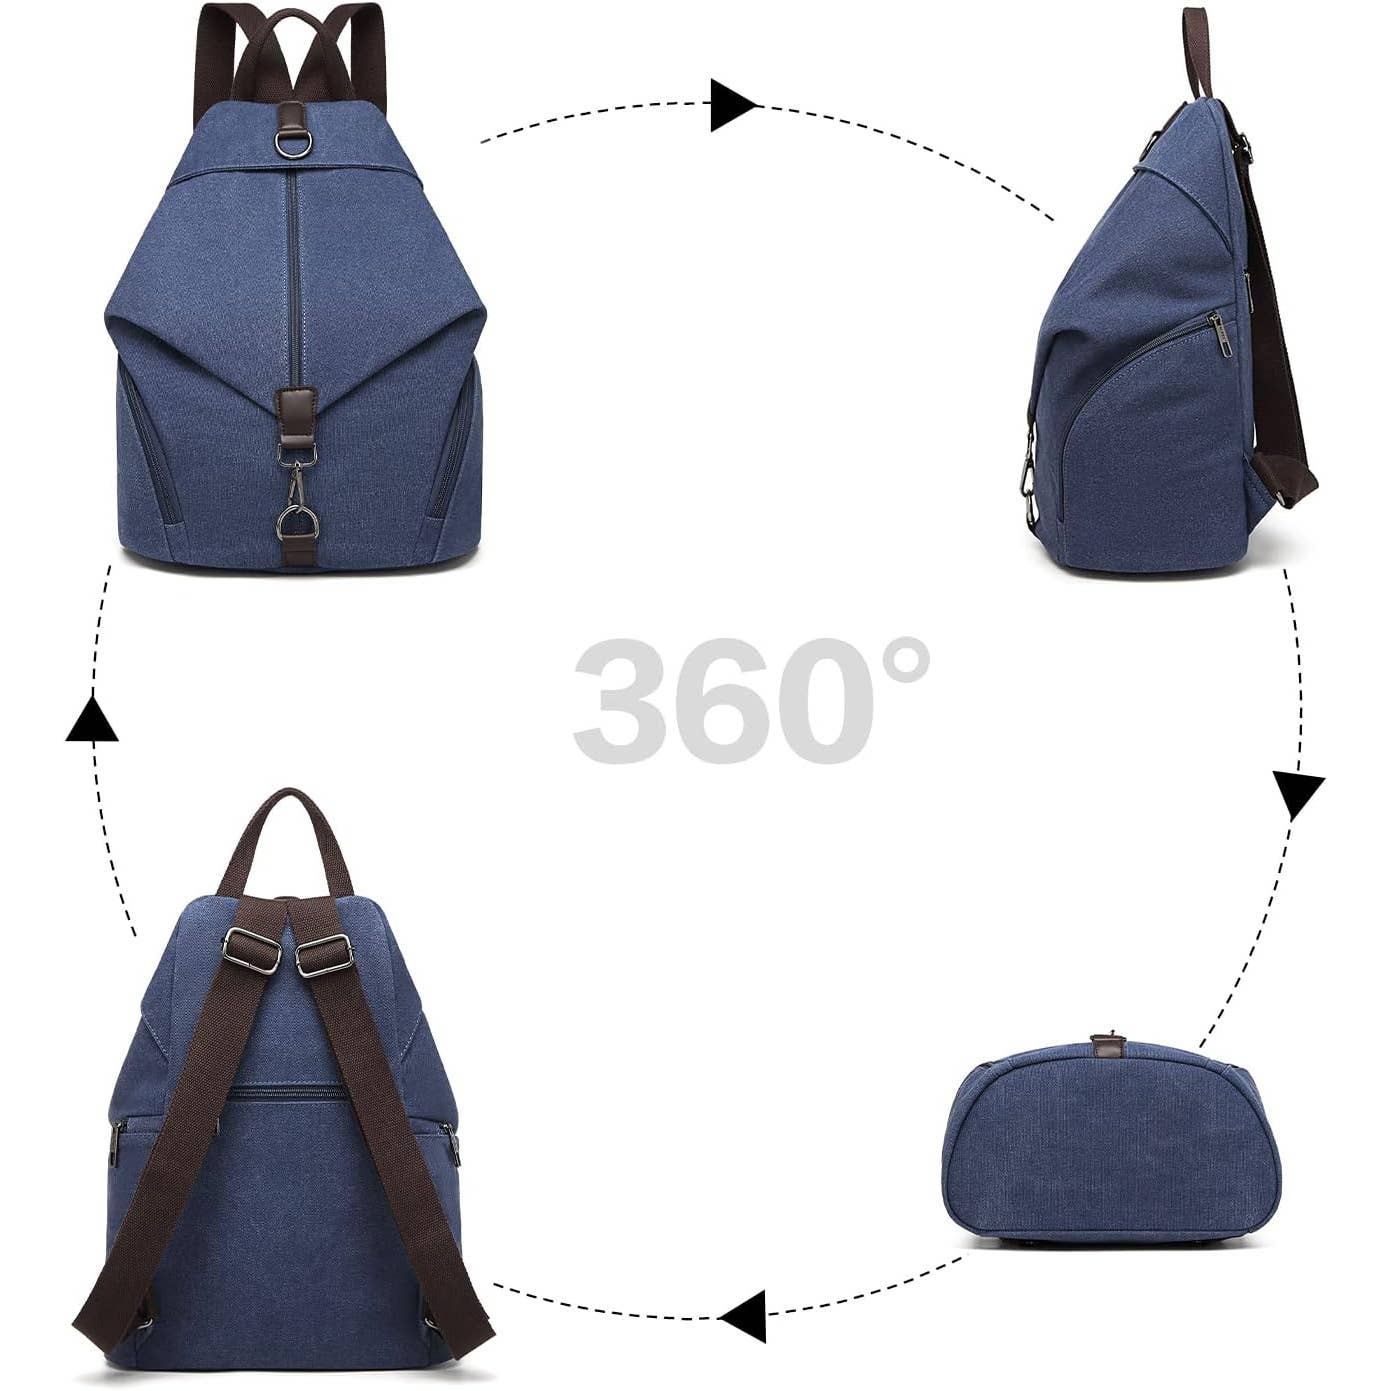 JOSEKO NEW Blue Denim Color Canvas Bag PERFECT SIZE Daypack